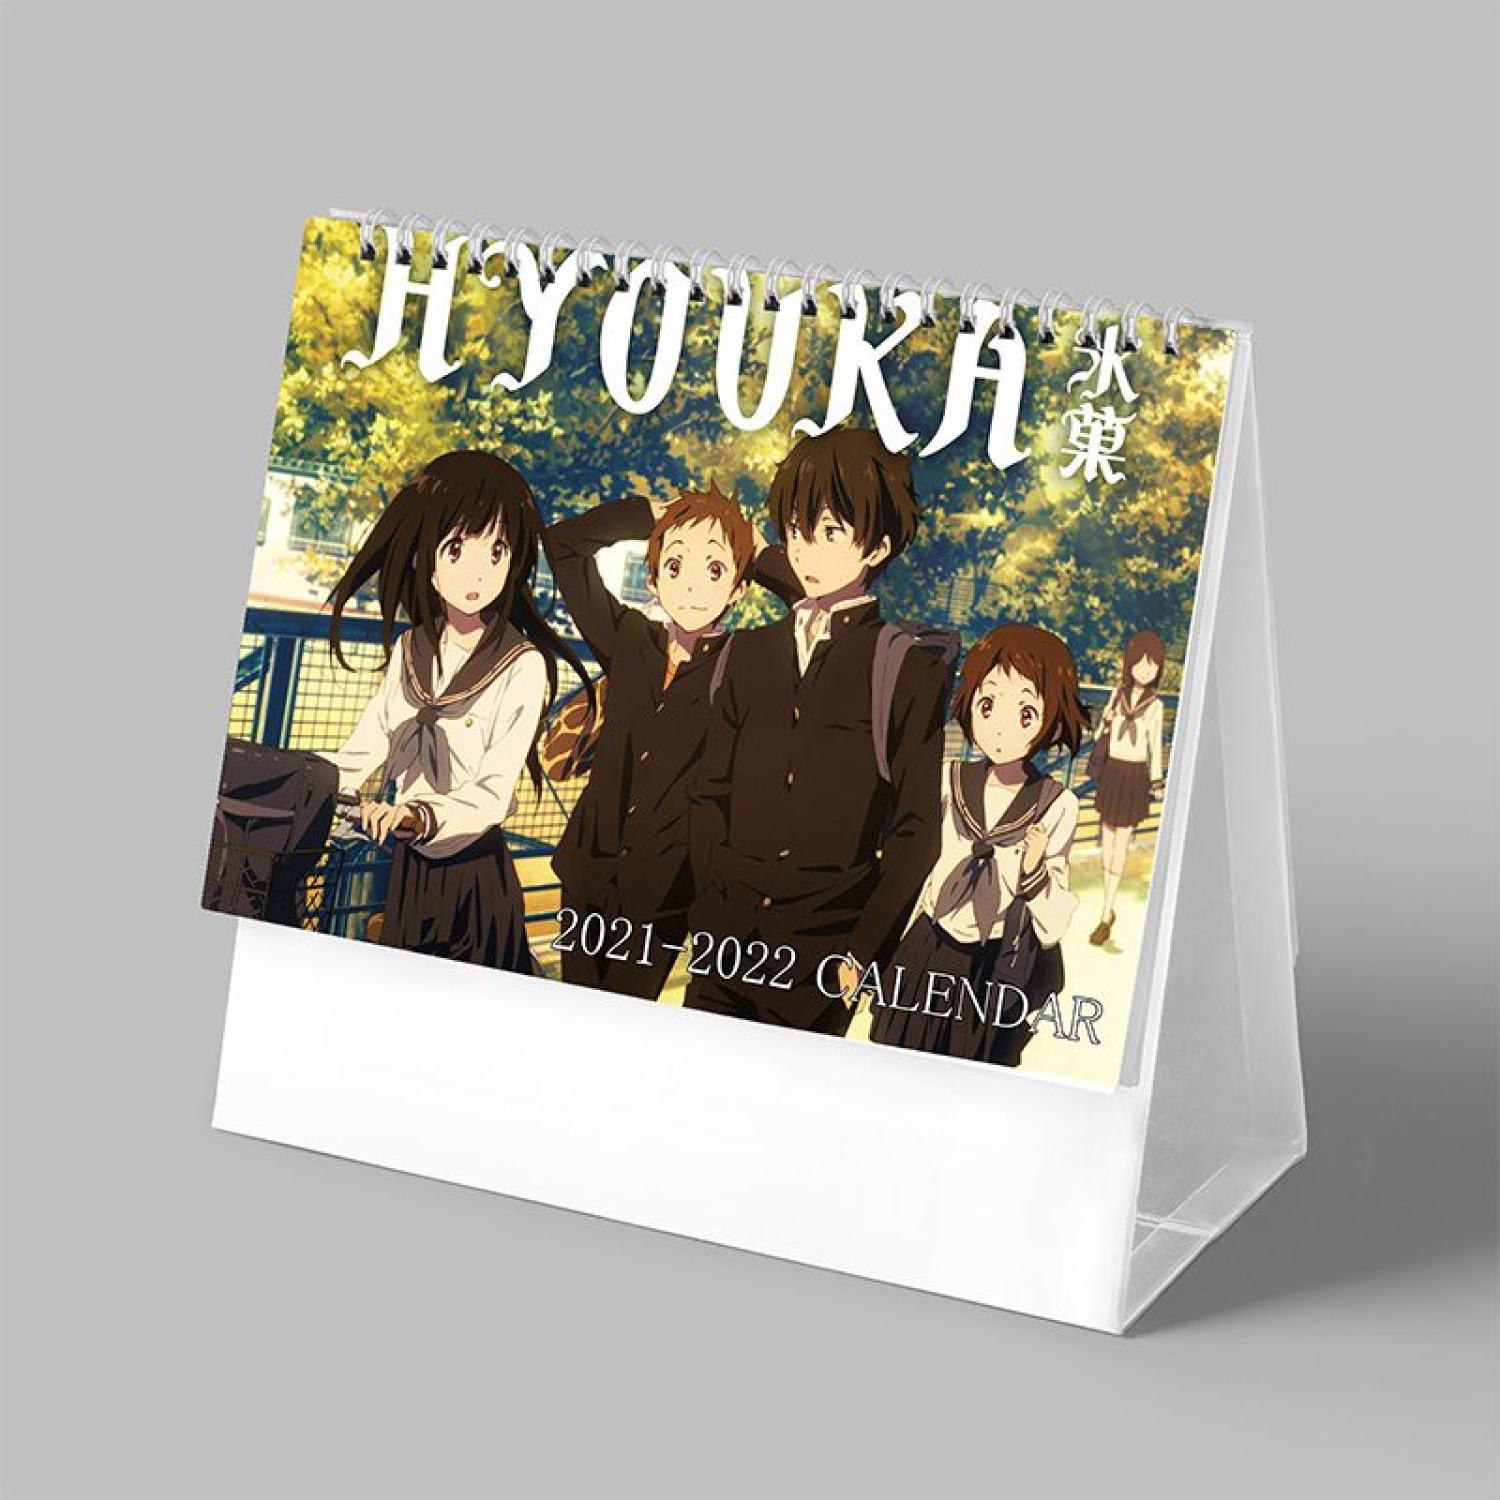 Hyouka folder icon by jubahitam on DeviantArt